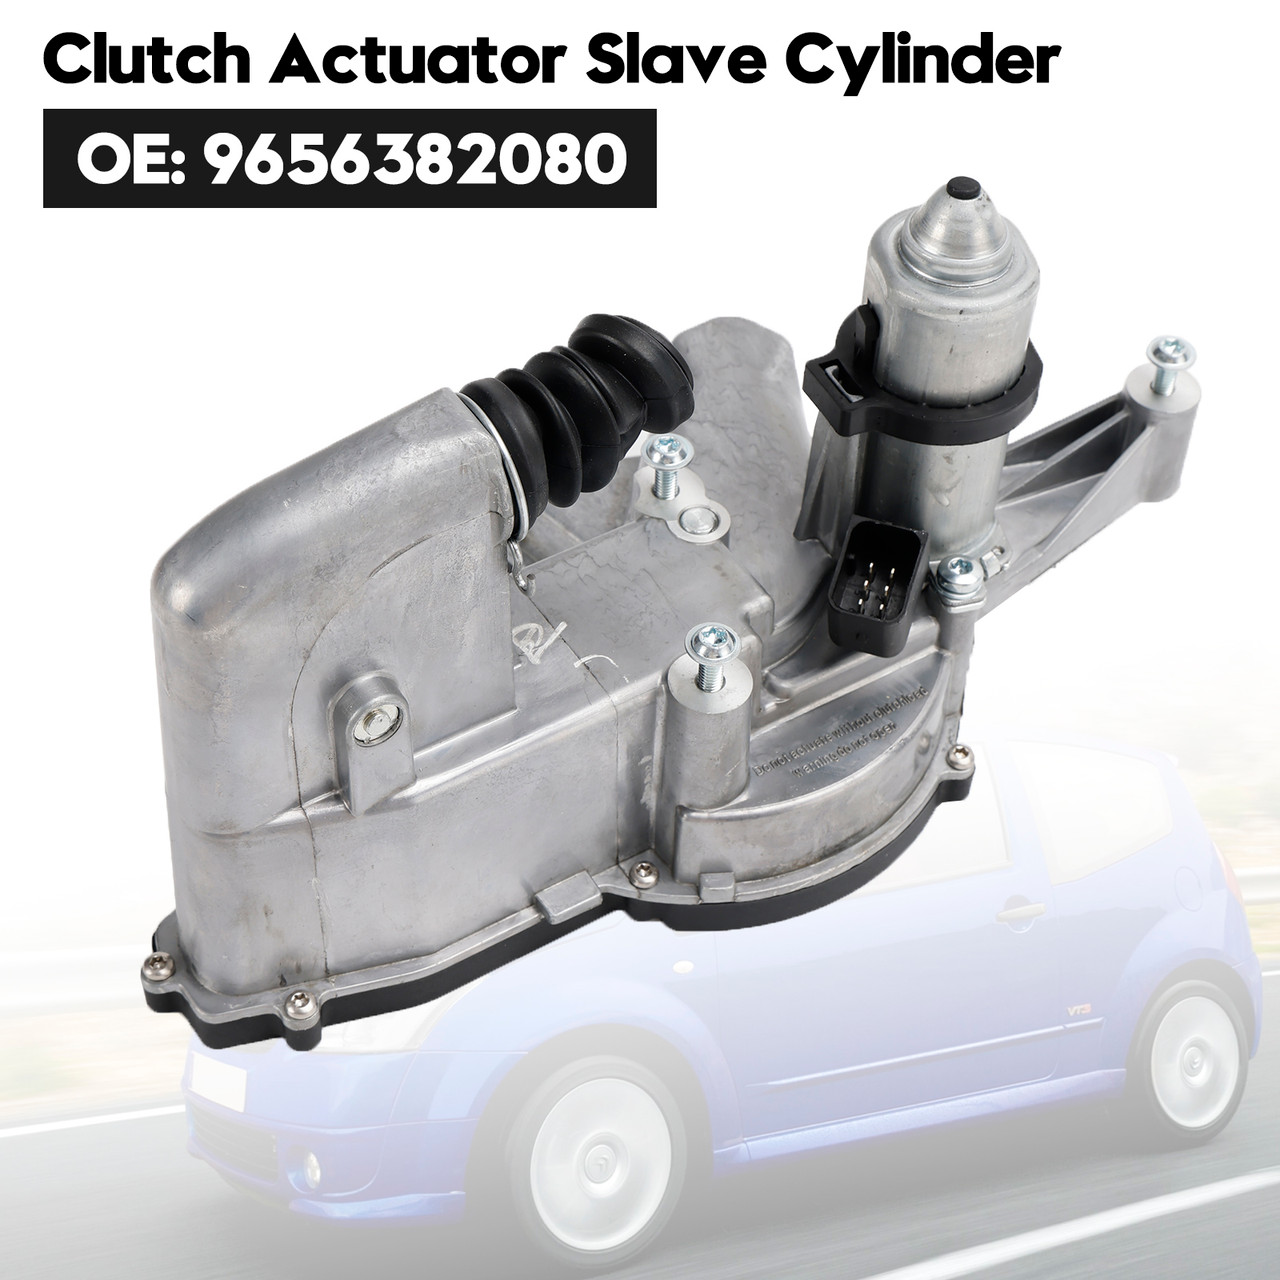 Clutch Actuator Slave Cylinder for Citroen C2 C3 DS3 Nemo Kombi 9656382080